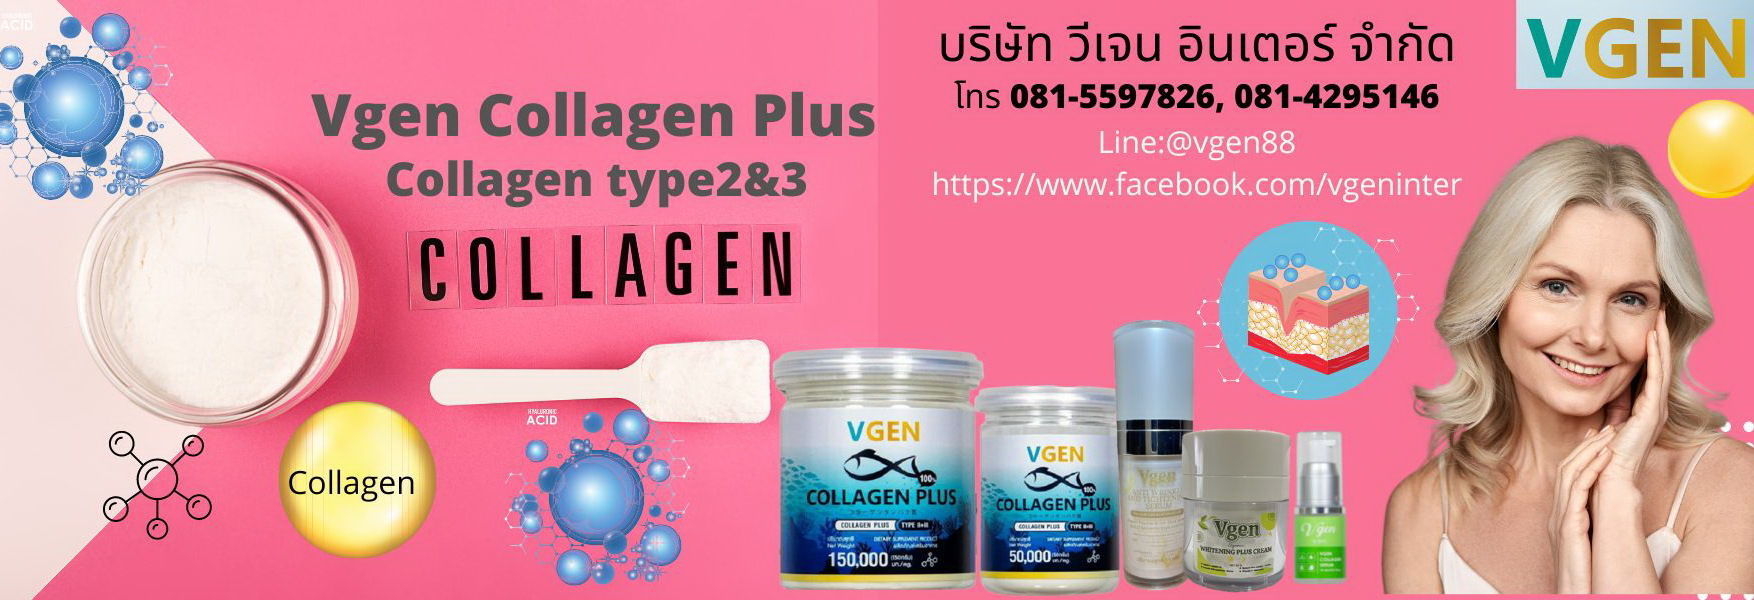 Promotion Vgen Collagen Plus